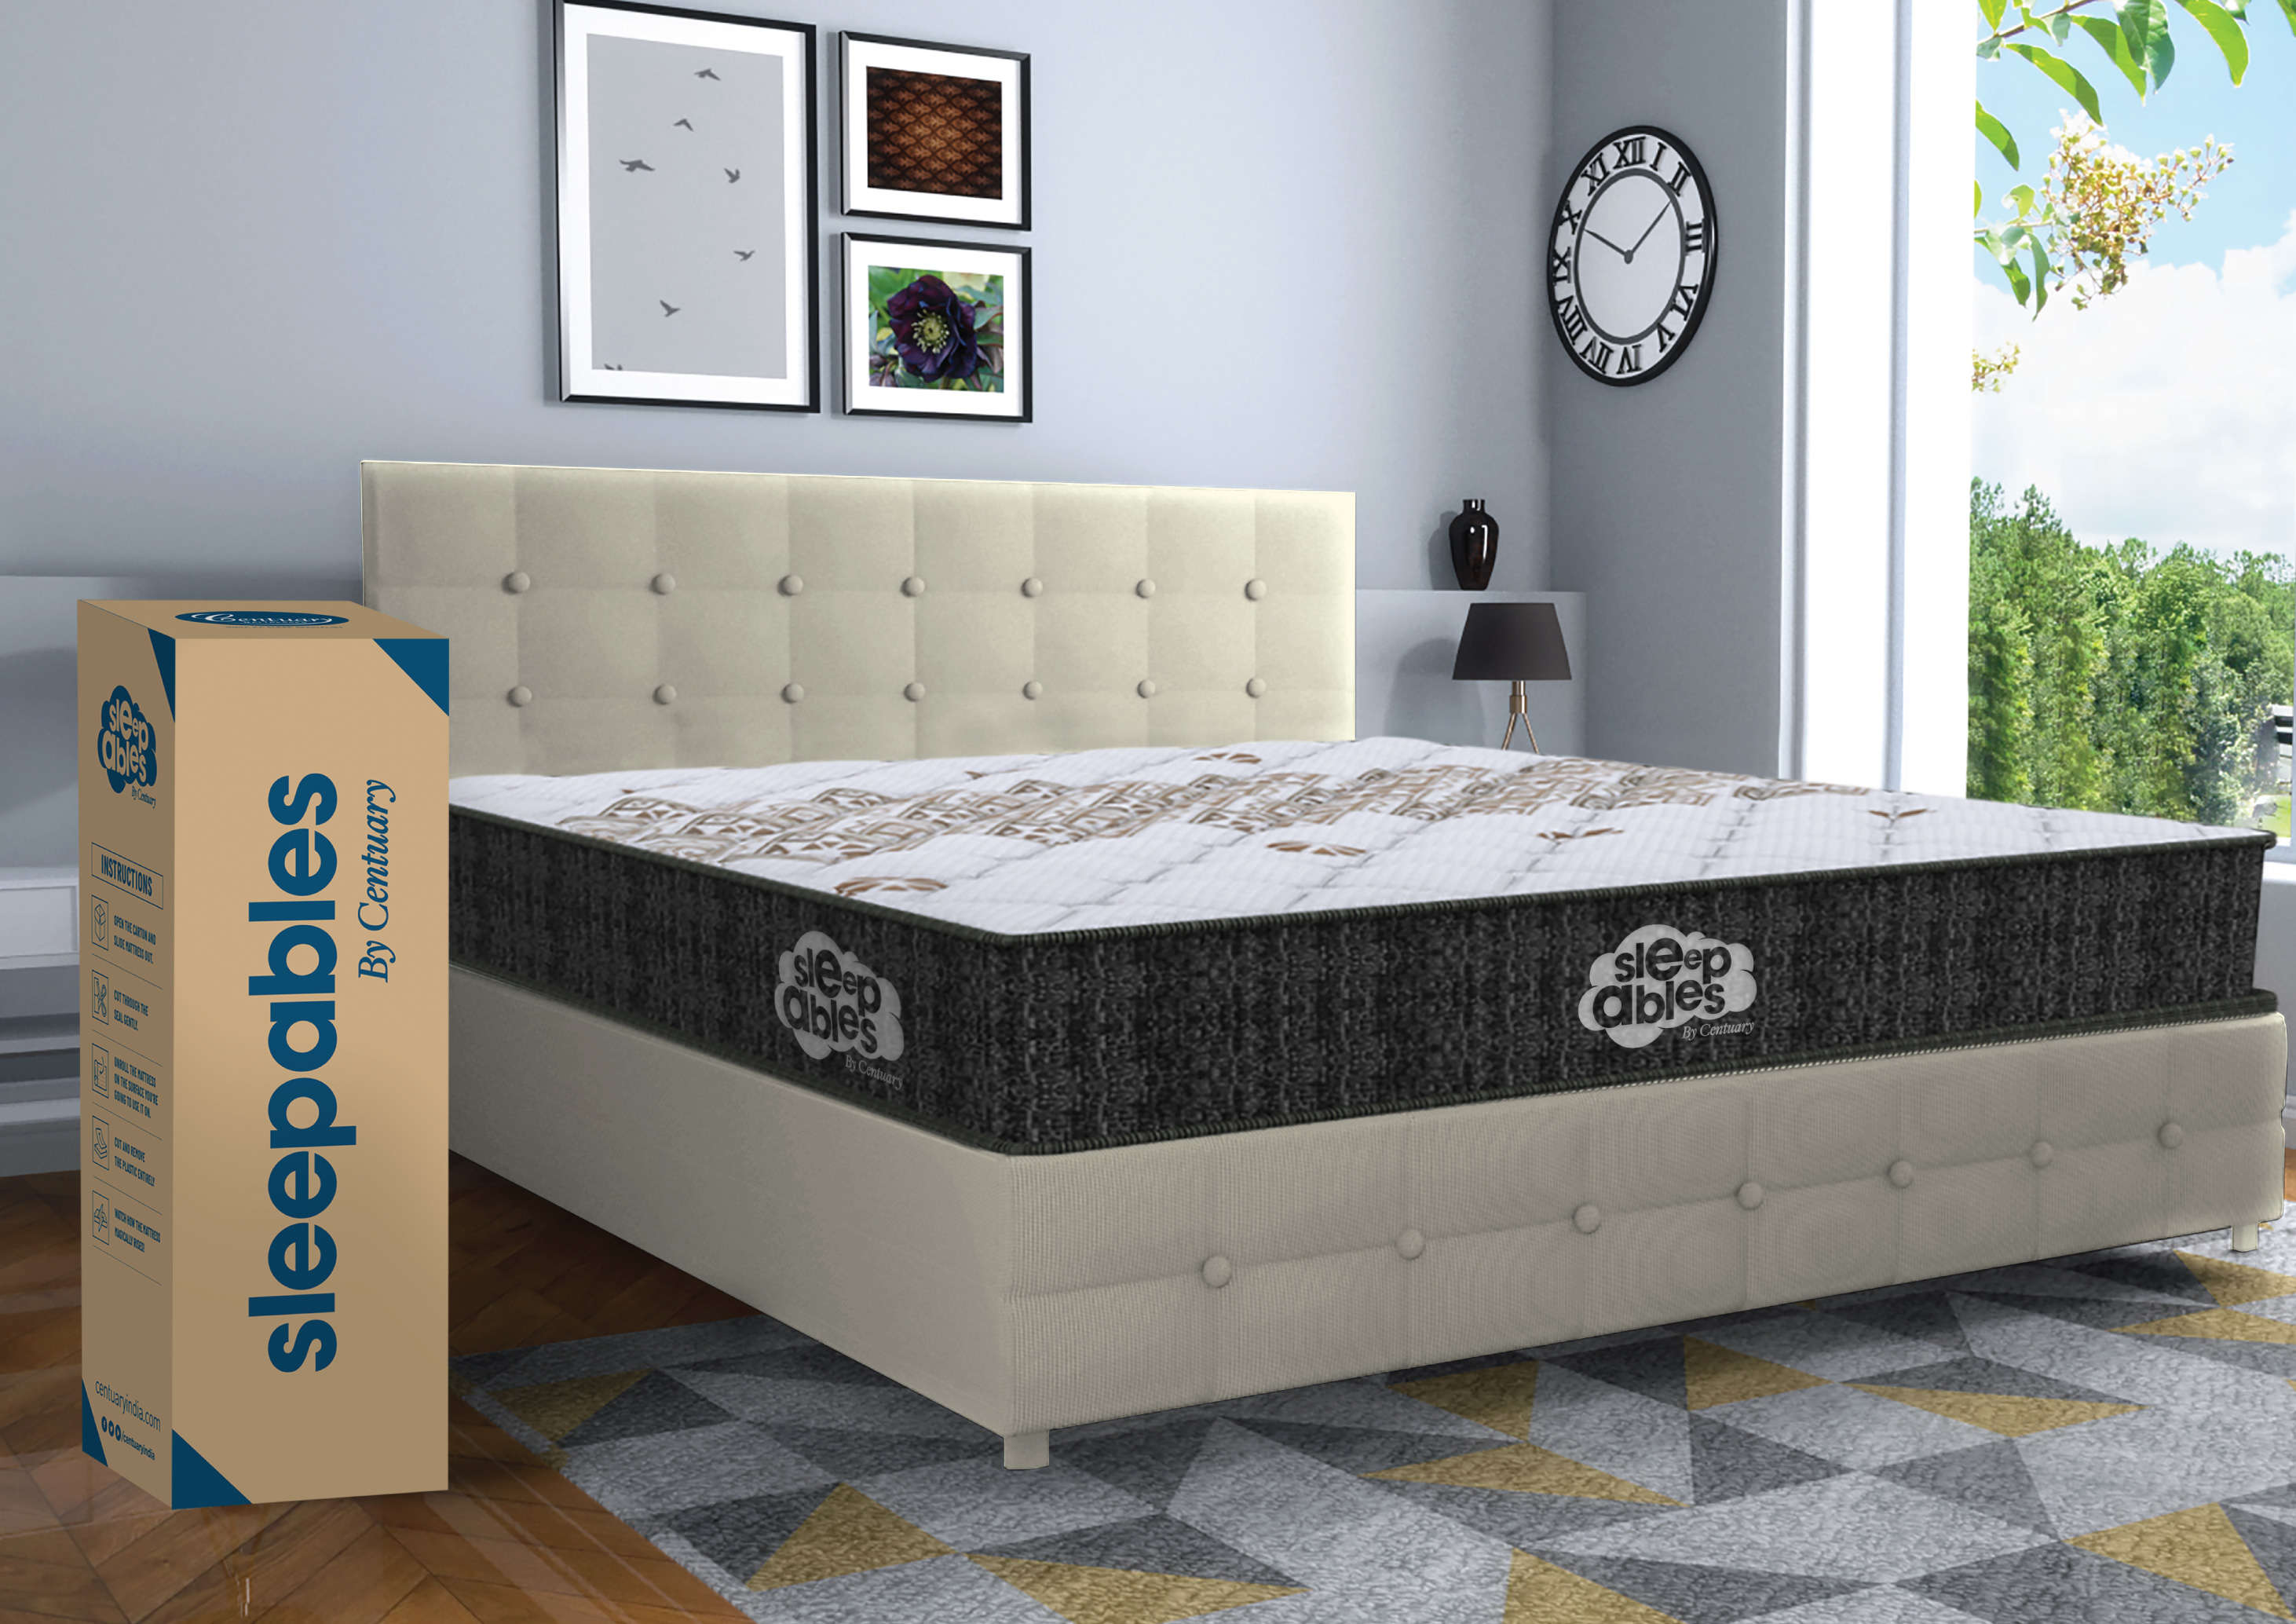 centuary bubble mattress price